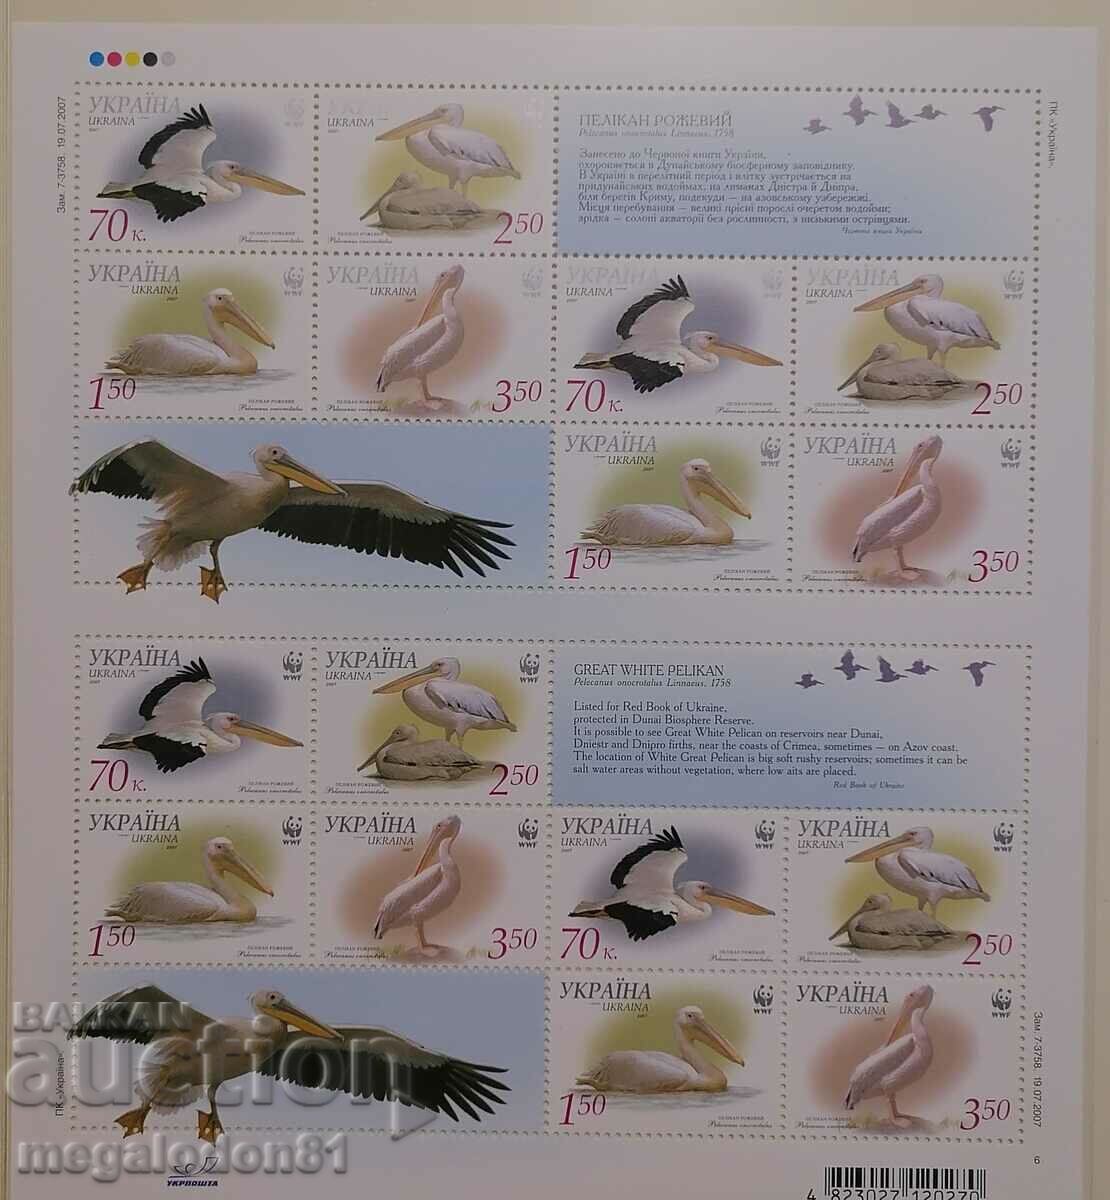 Ucraina - WWF, pelican